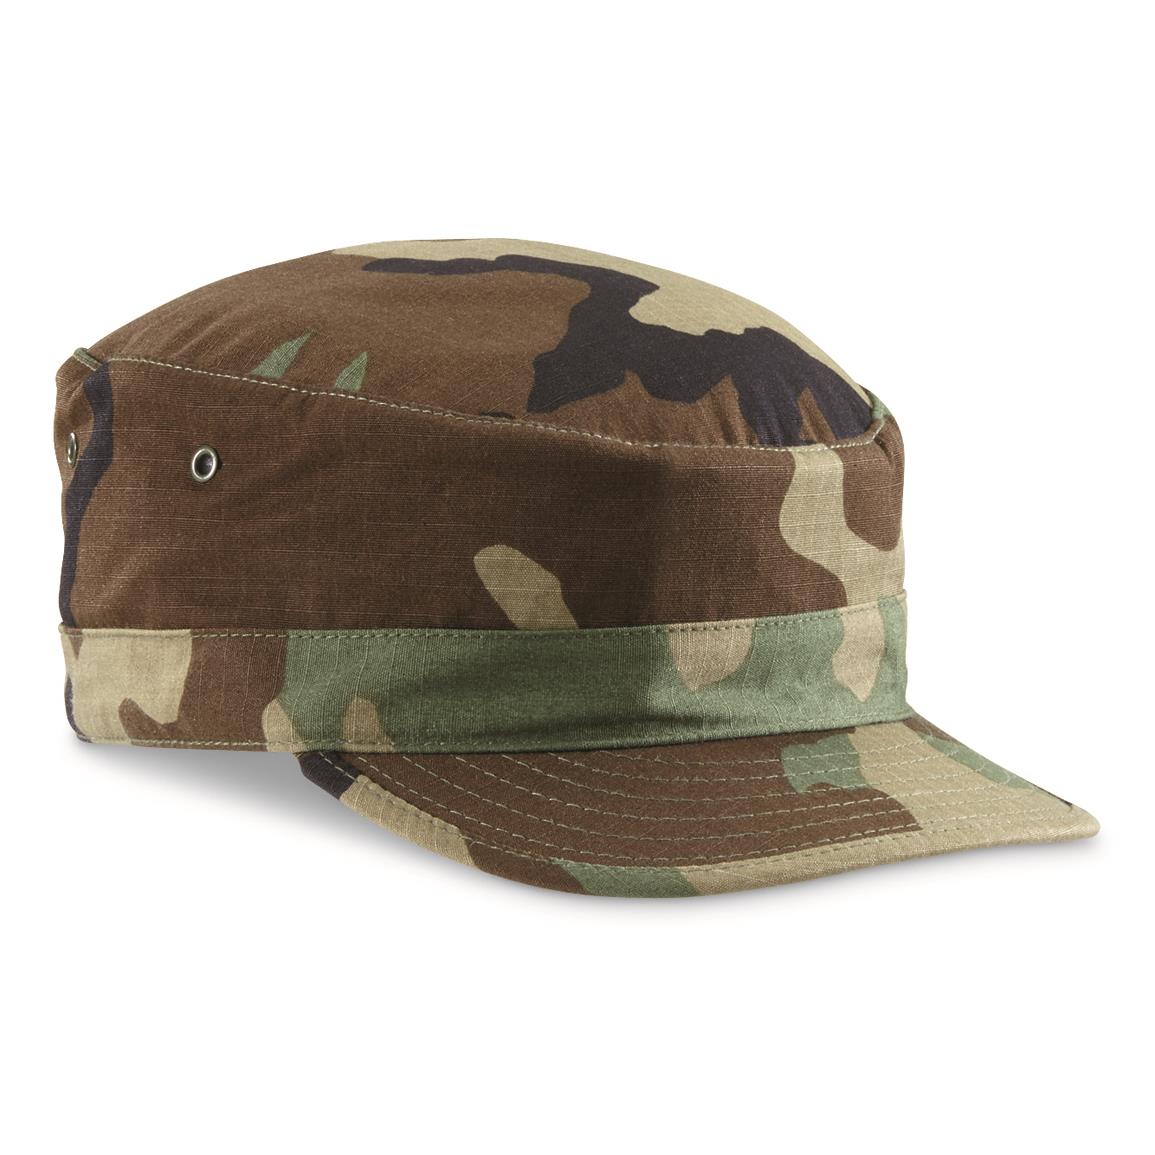 U.S.Military Surplus Field Caps, 3 Pack, New - 702241, Military Hats